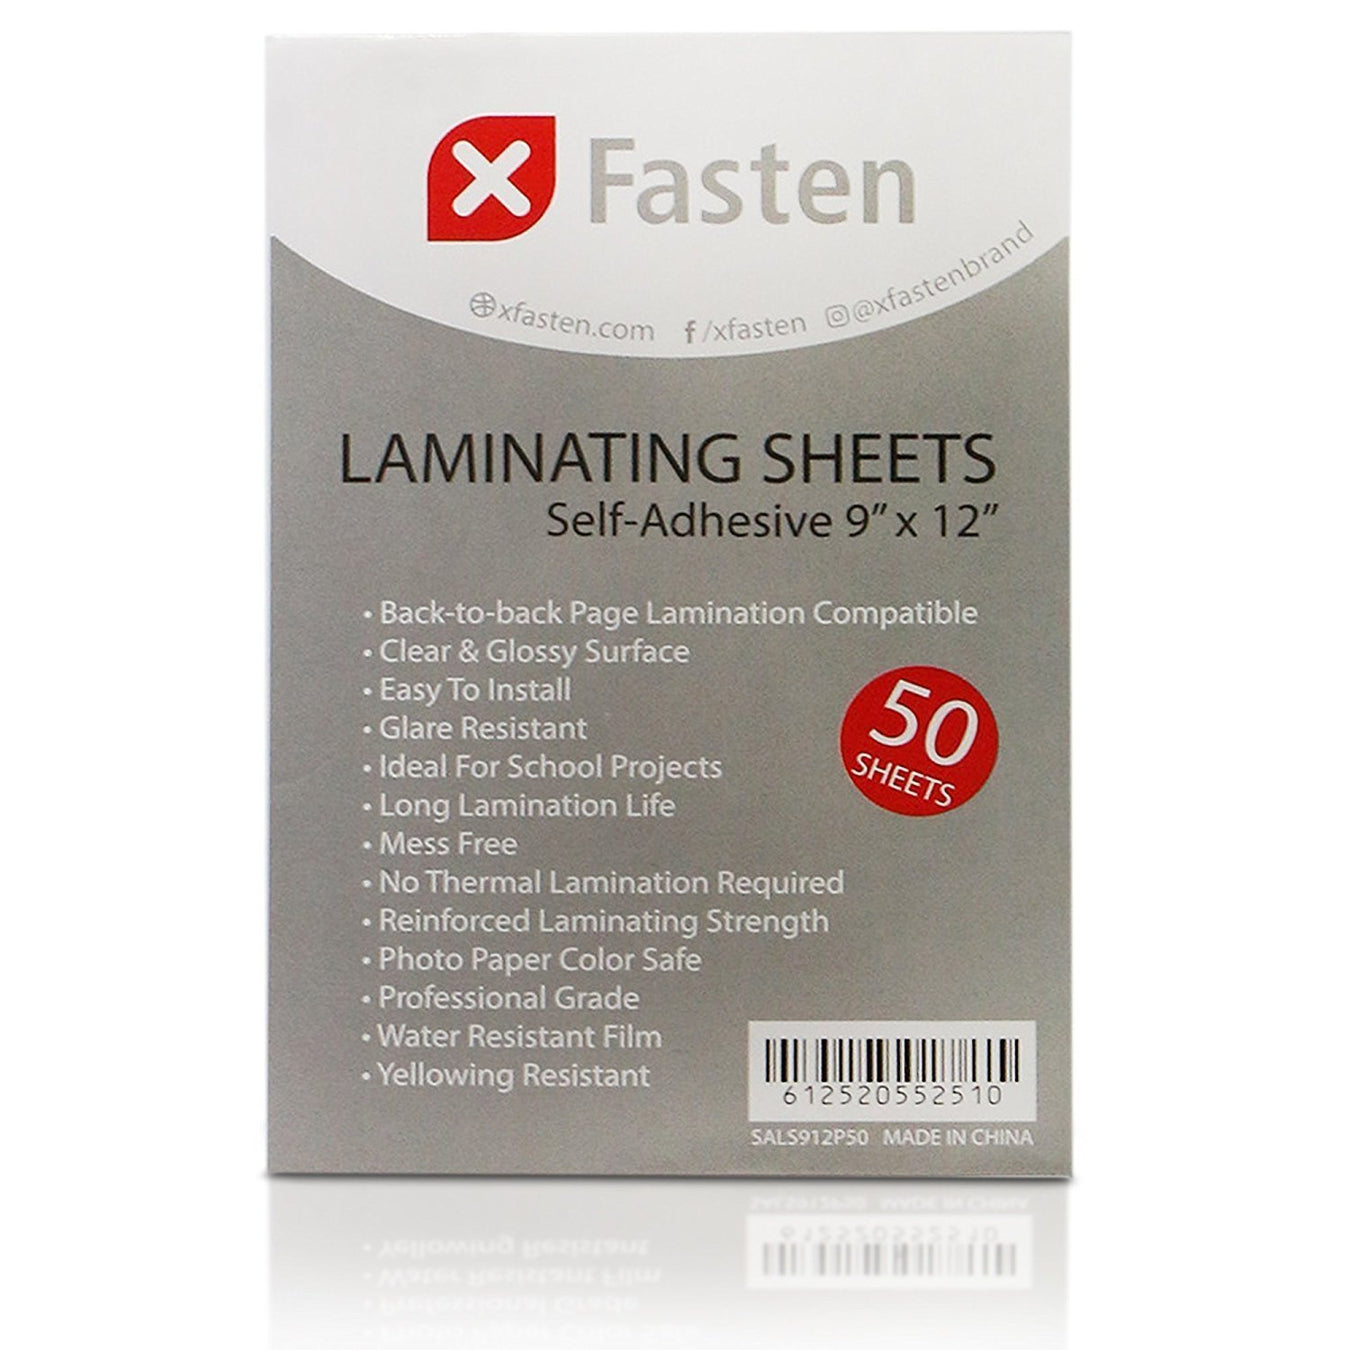 Laminating Sheets - XFasten